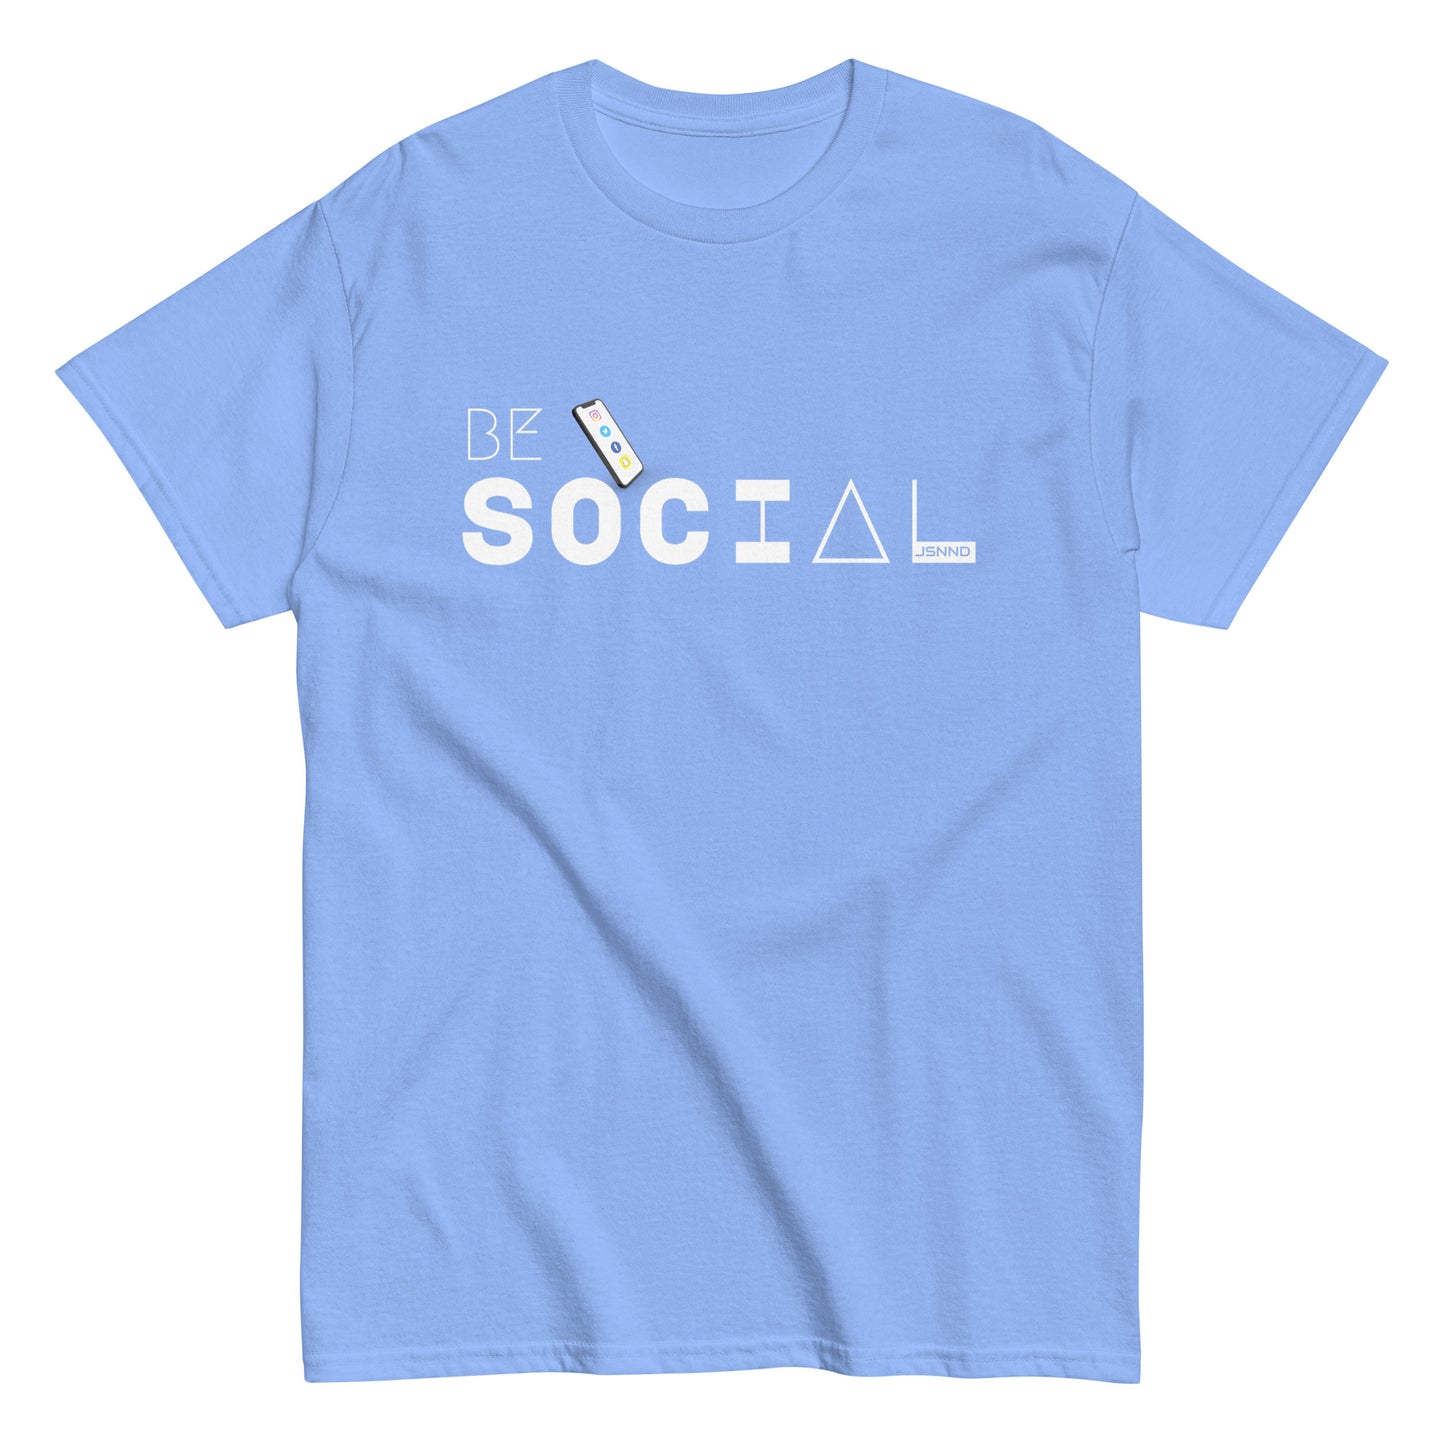 BE SOCIAL T-shirt